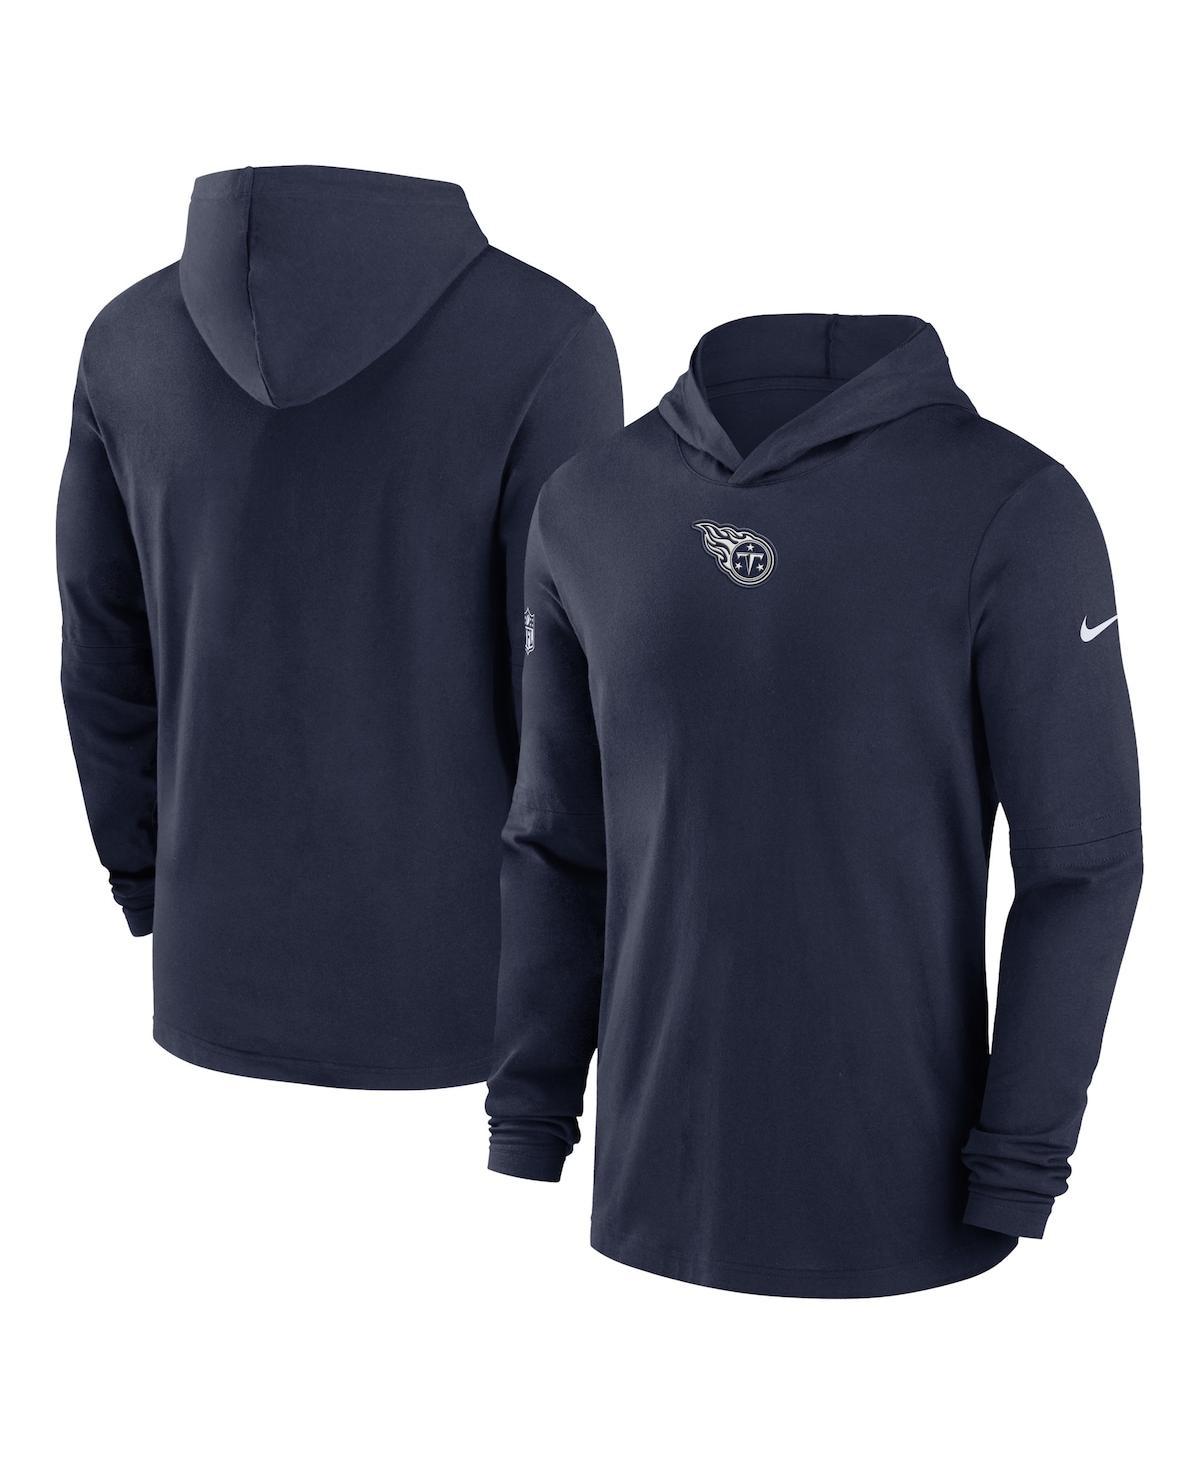 Nike Men's New England Patriots Sideline Velocity Long Sleeve T-Shirt - Navy - L Each